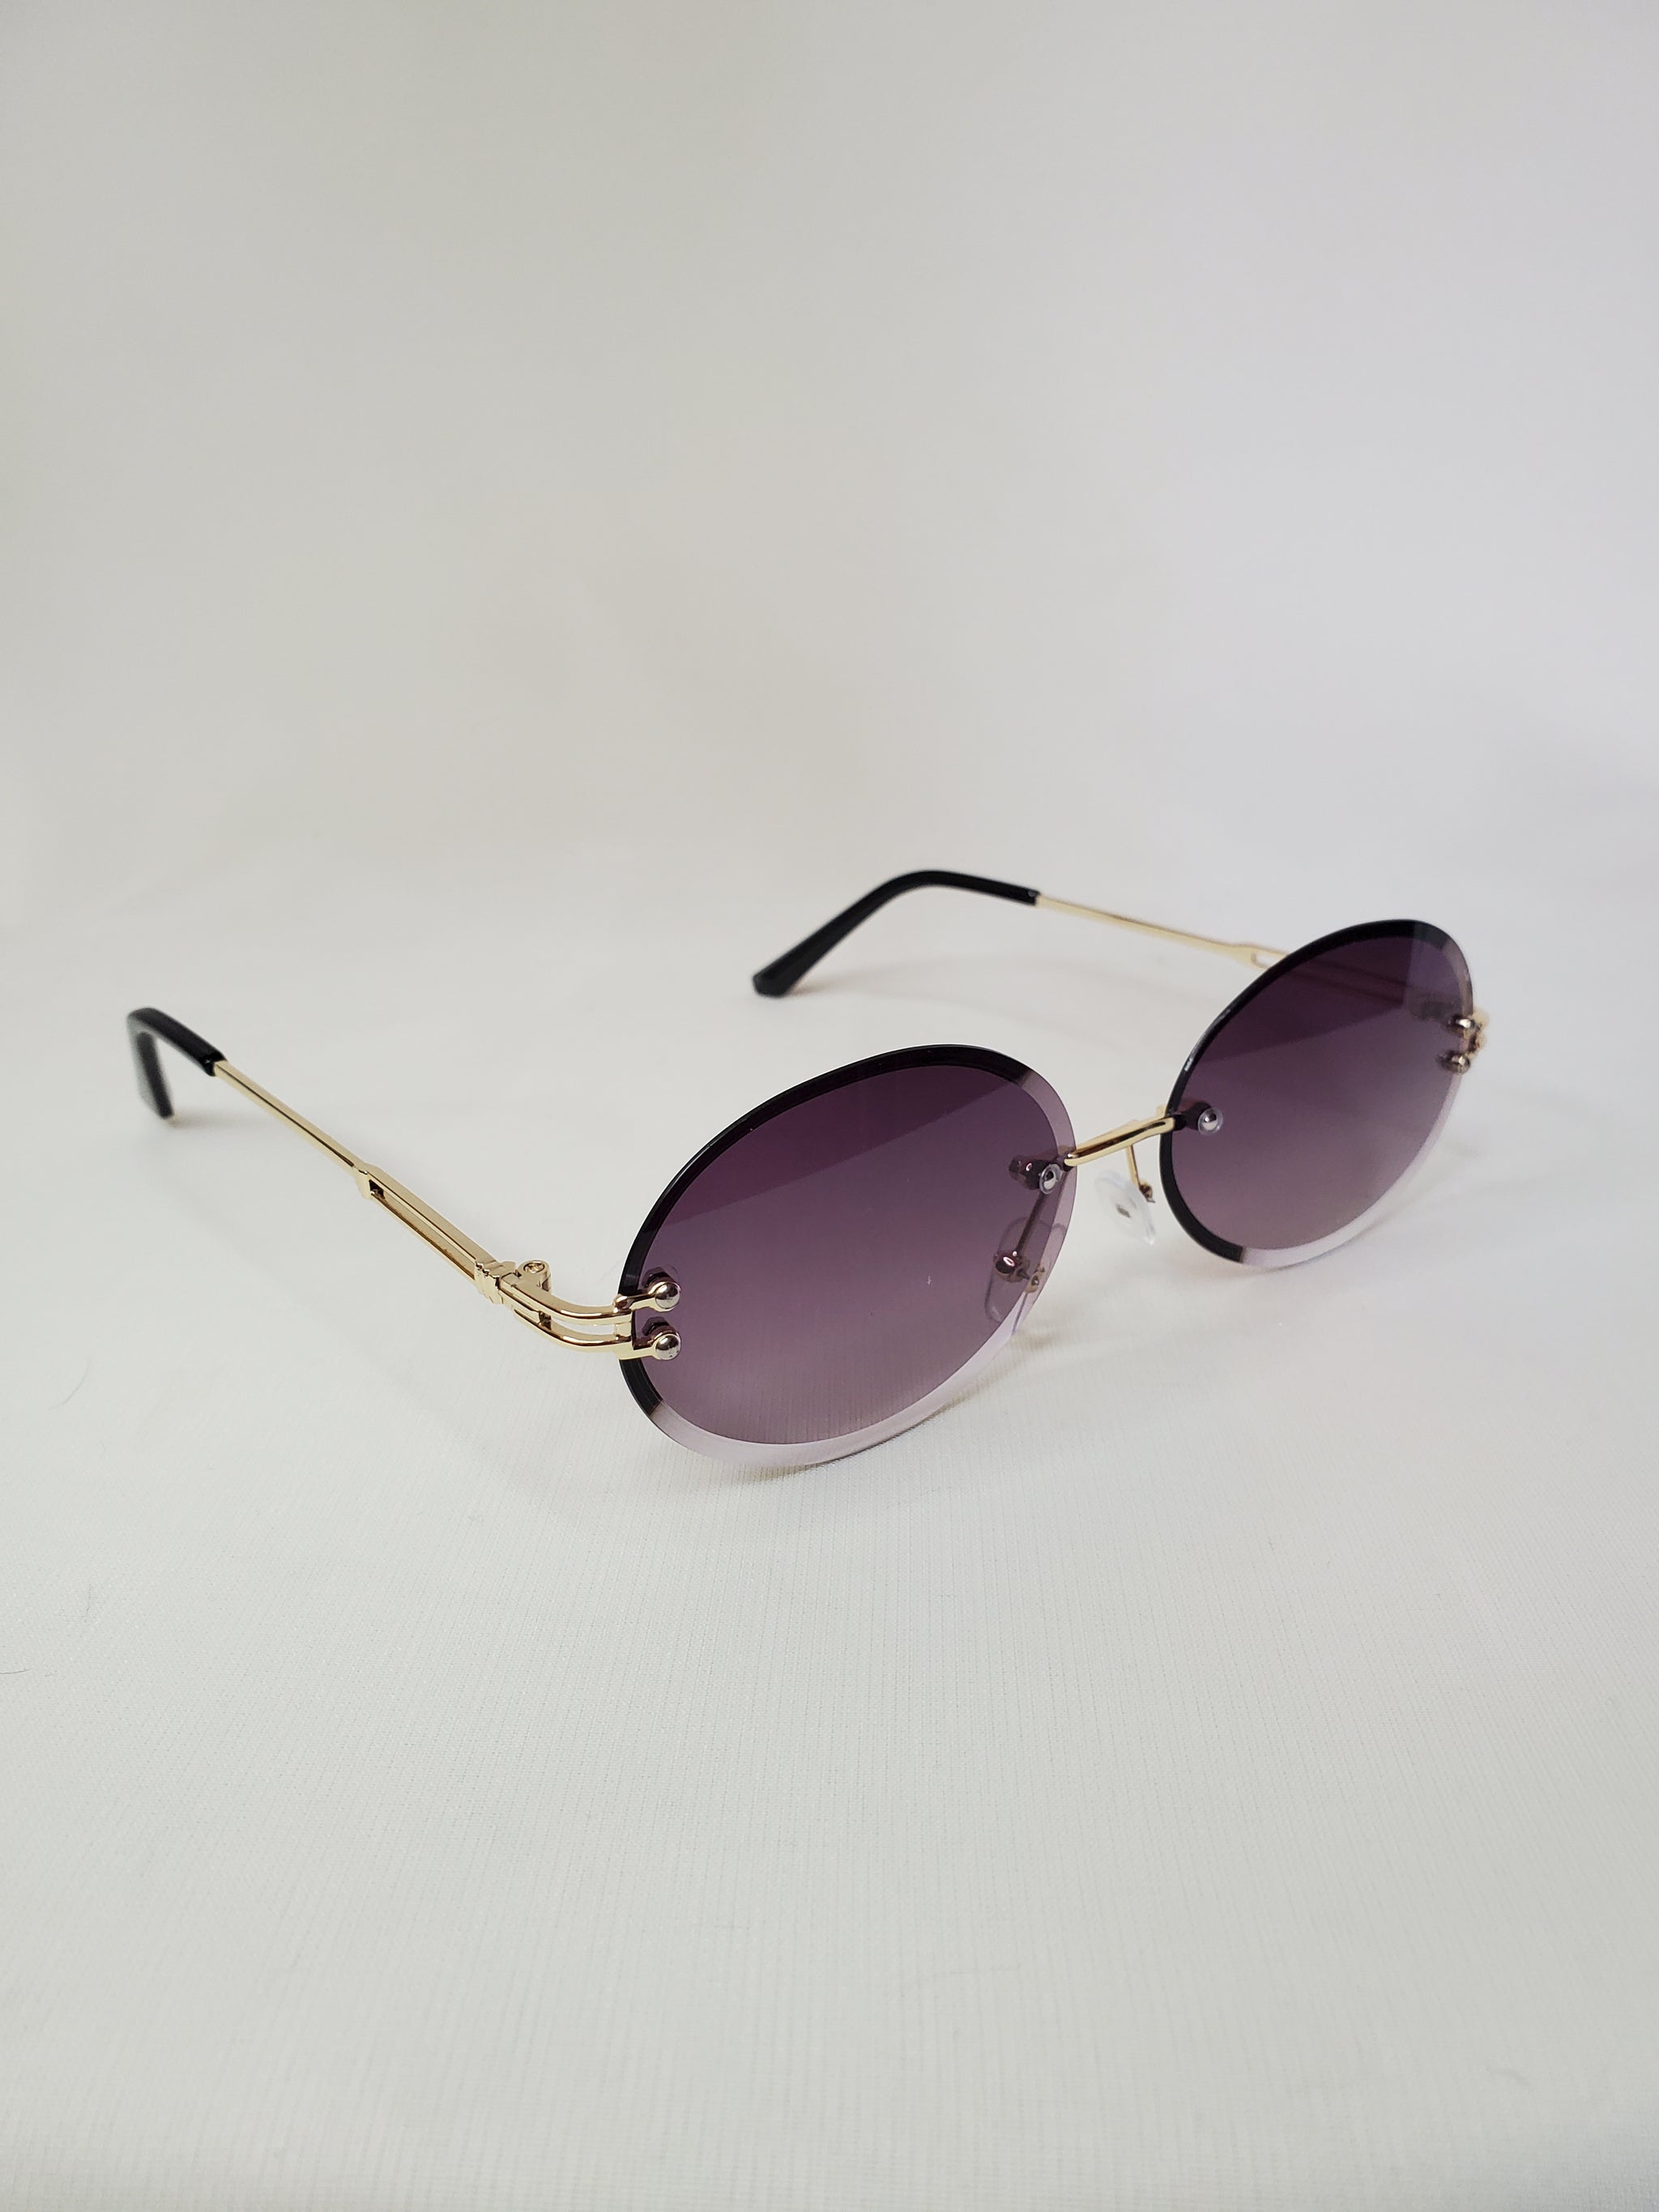 Zulu & Zephyr x Local Supply - Oval Sunglasses - Black